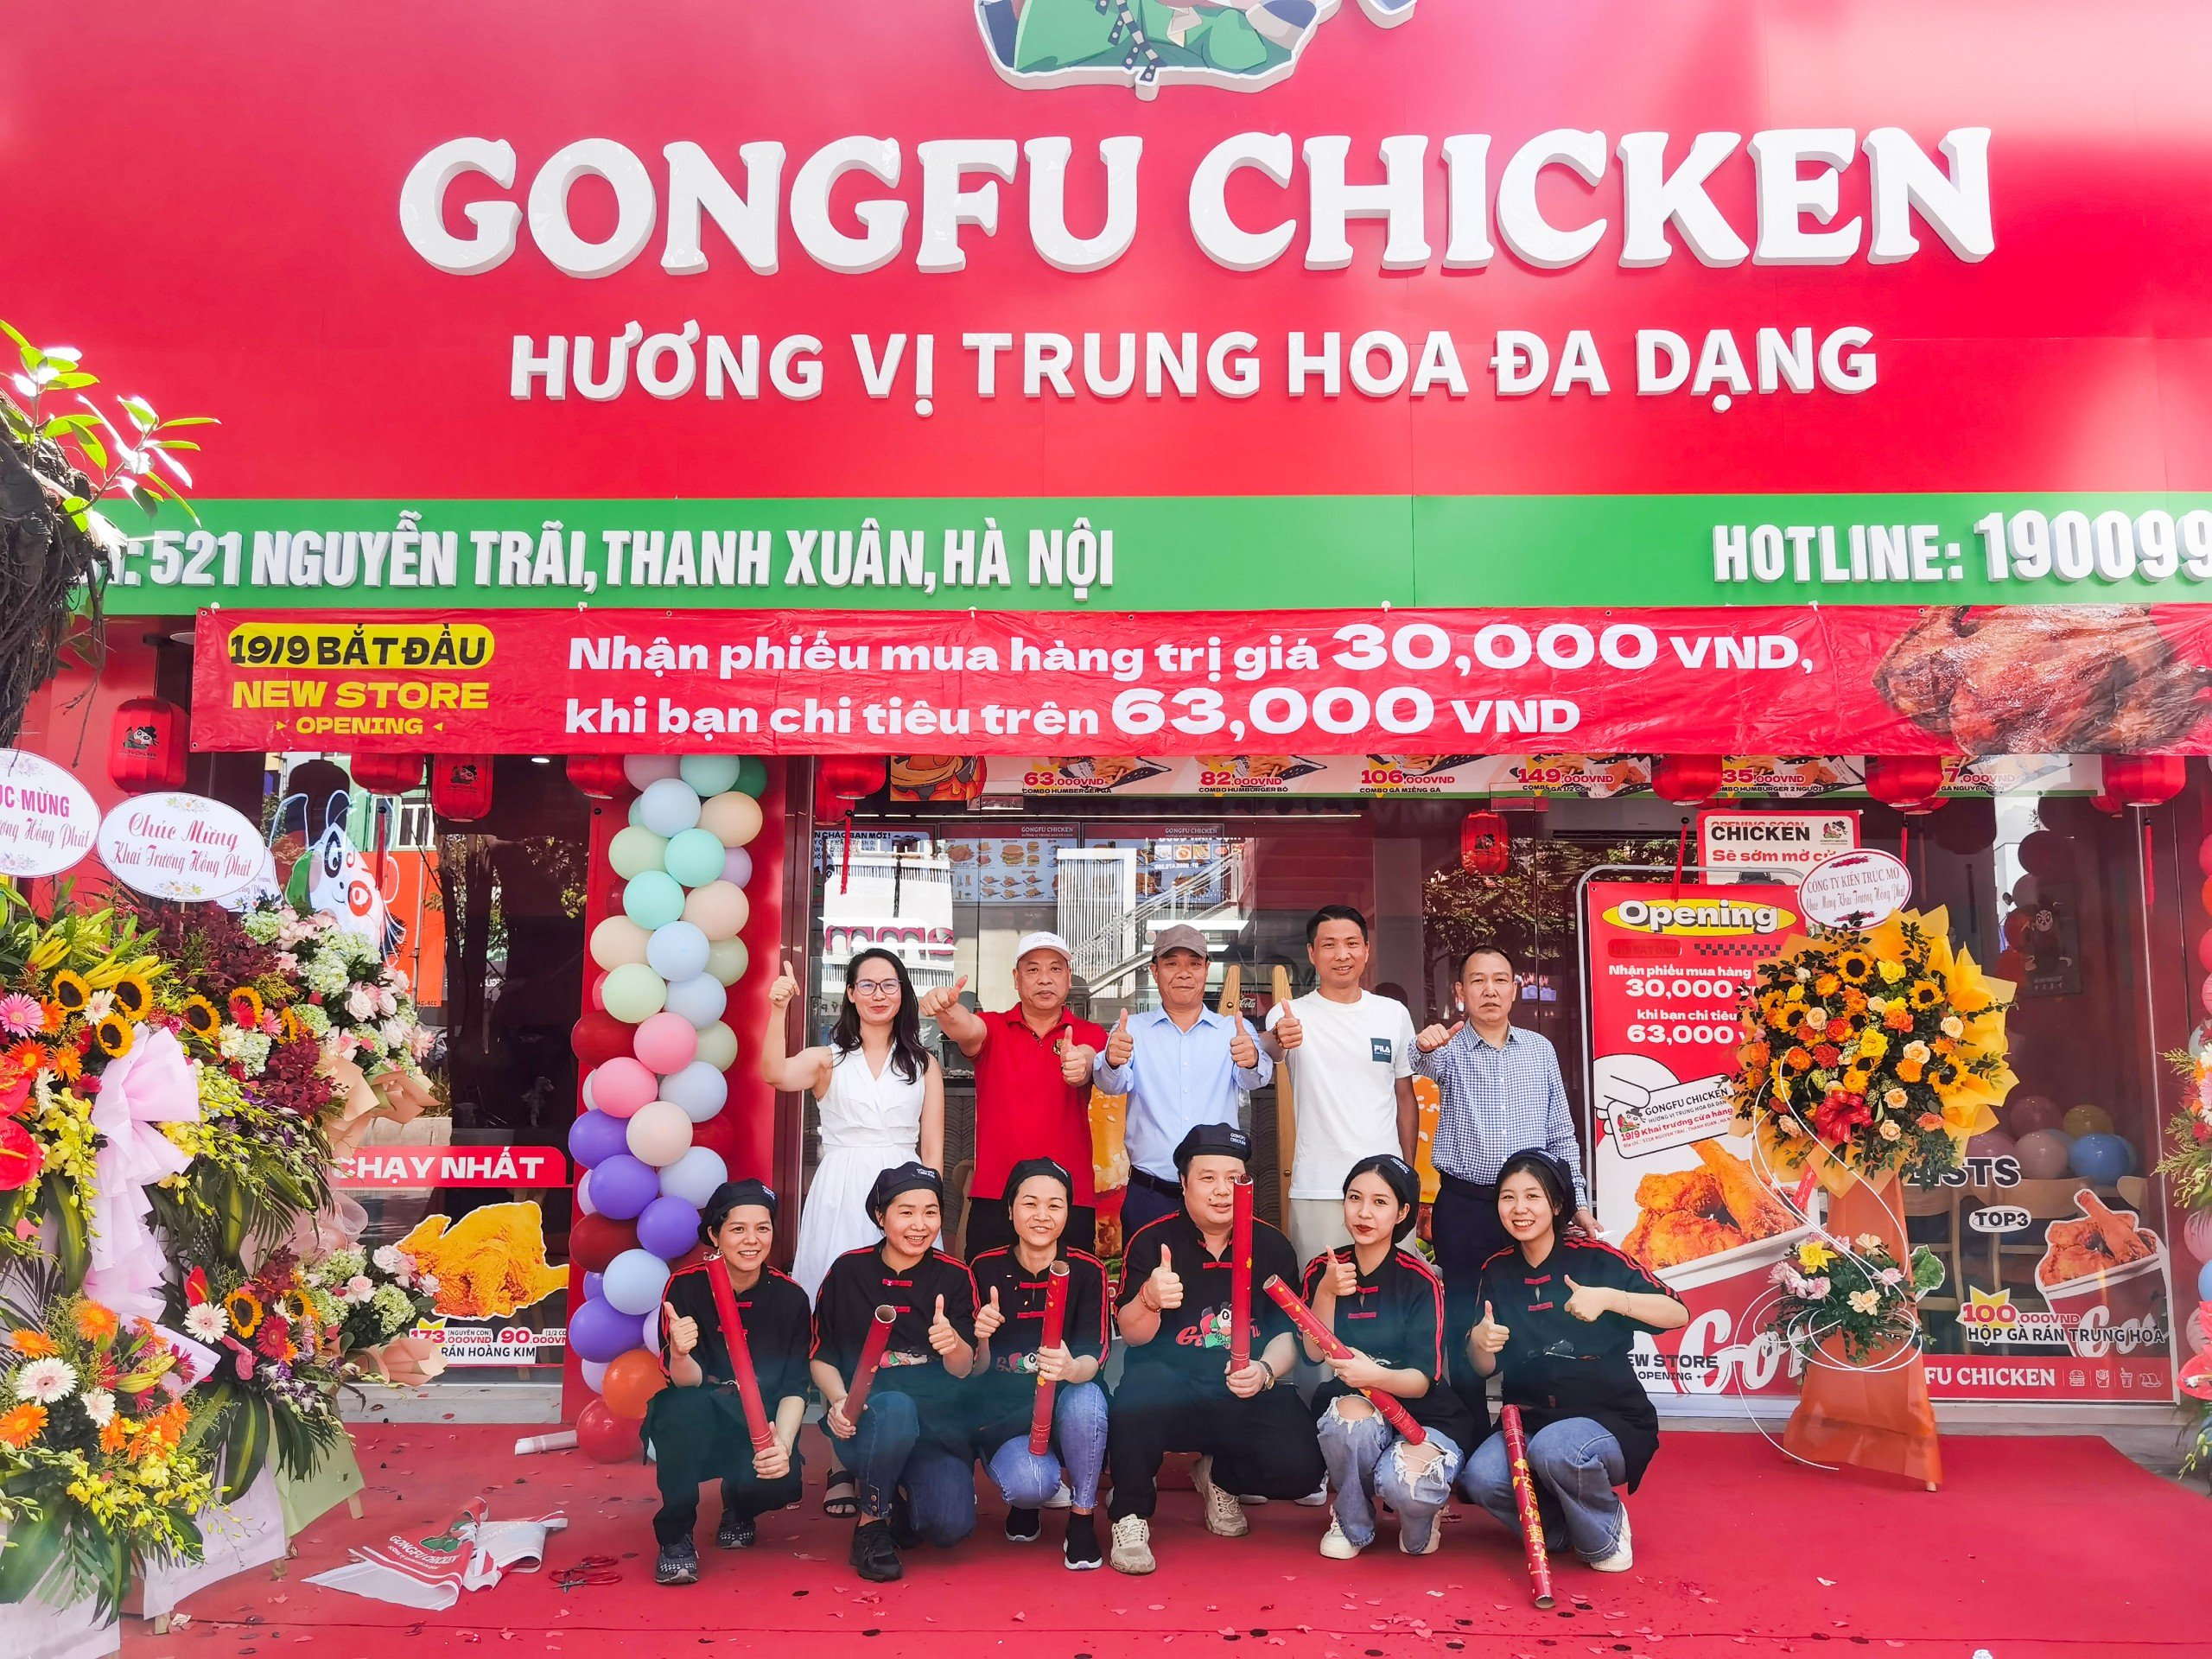 Gongfu chicken